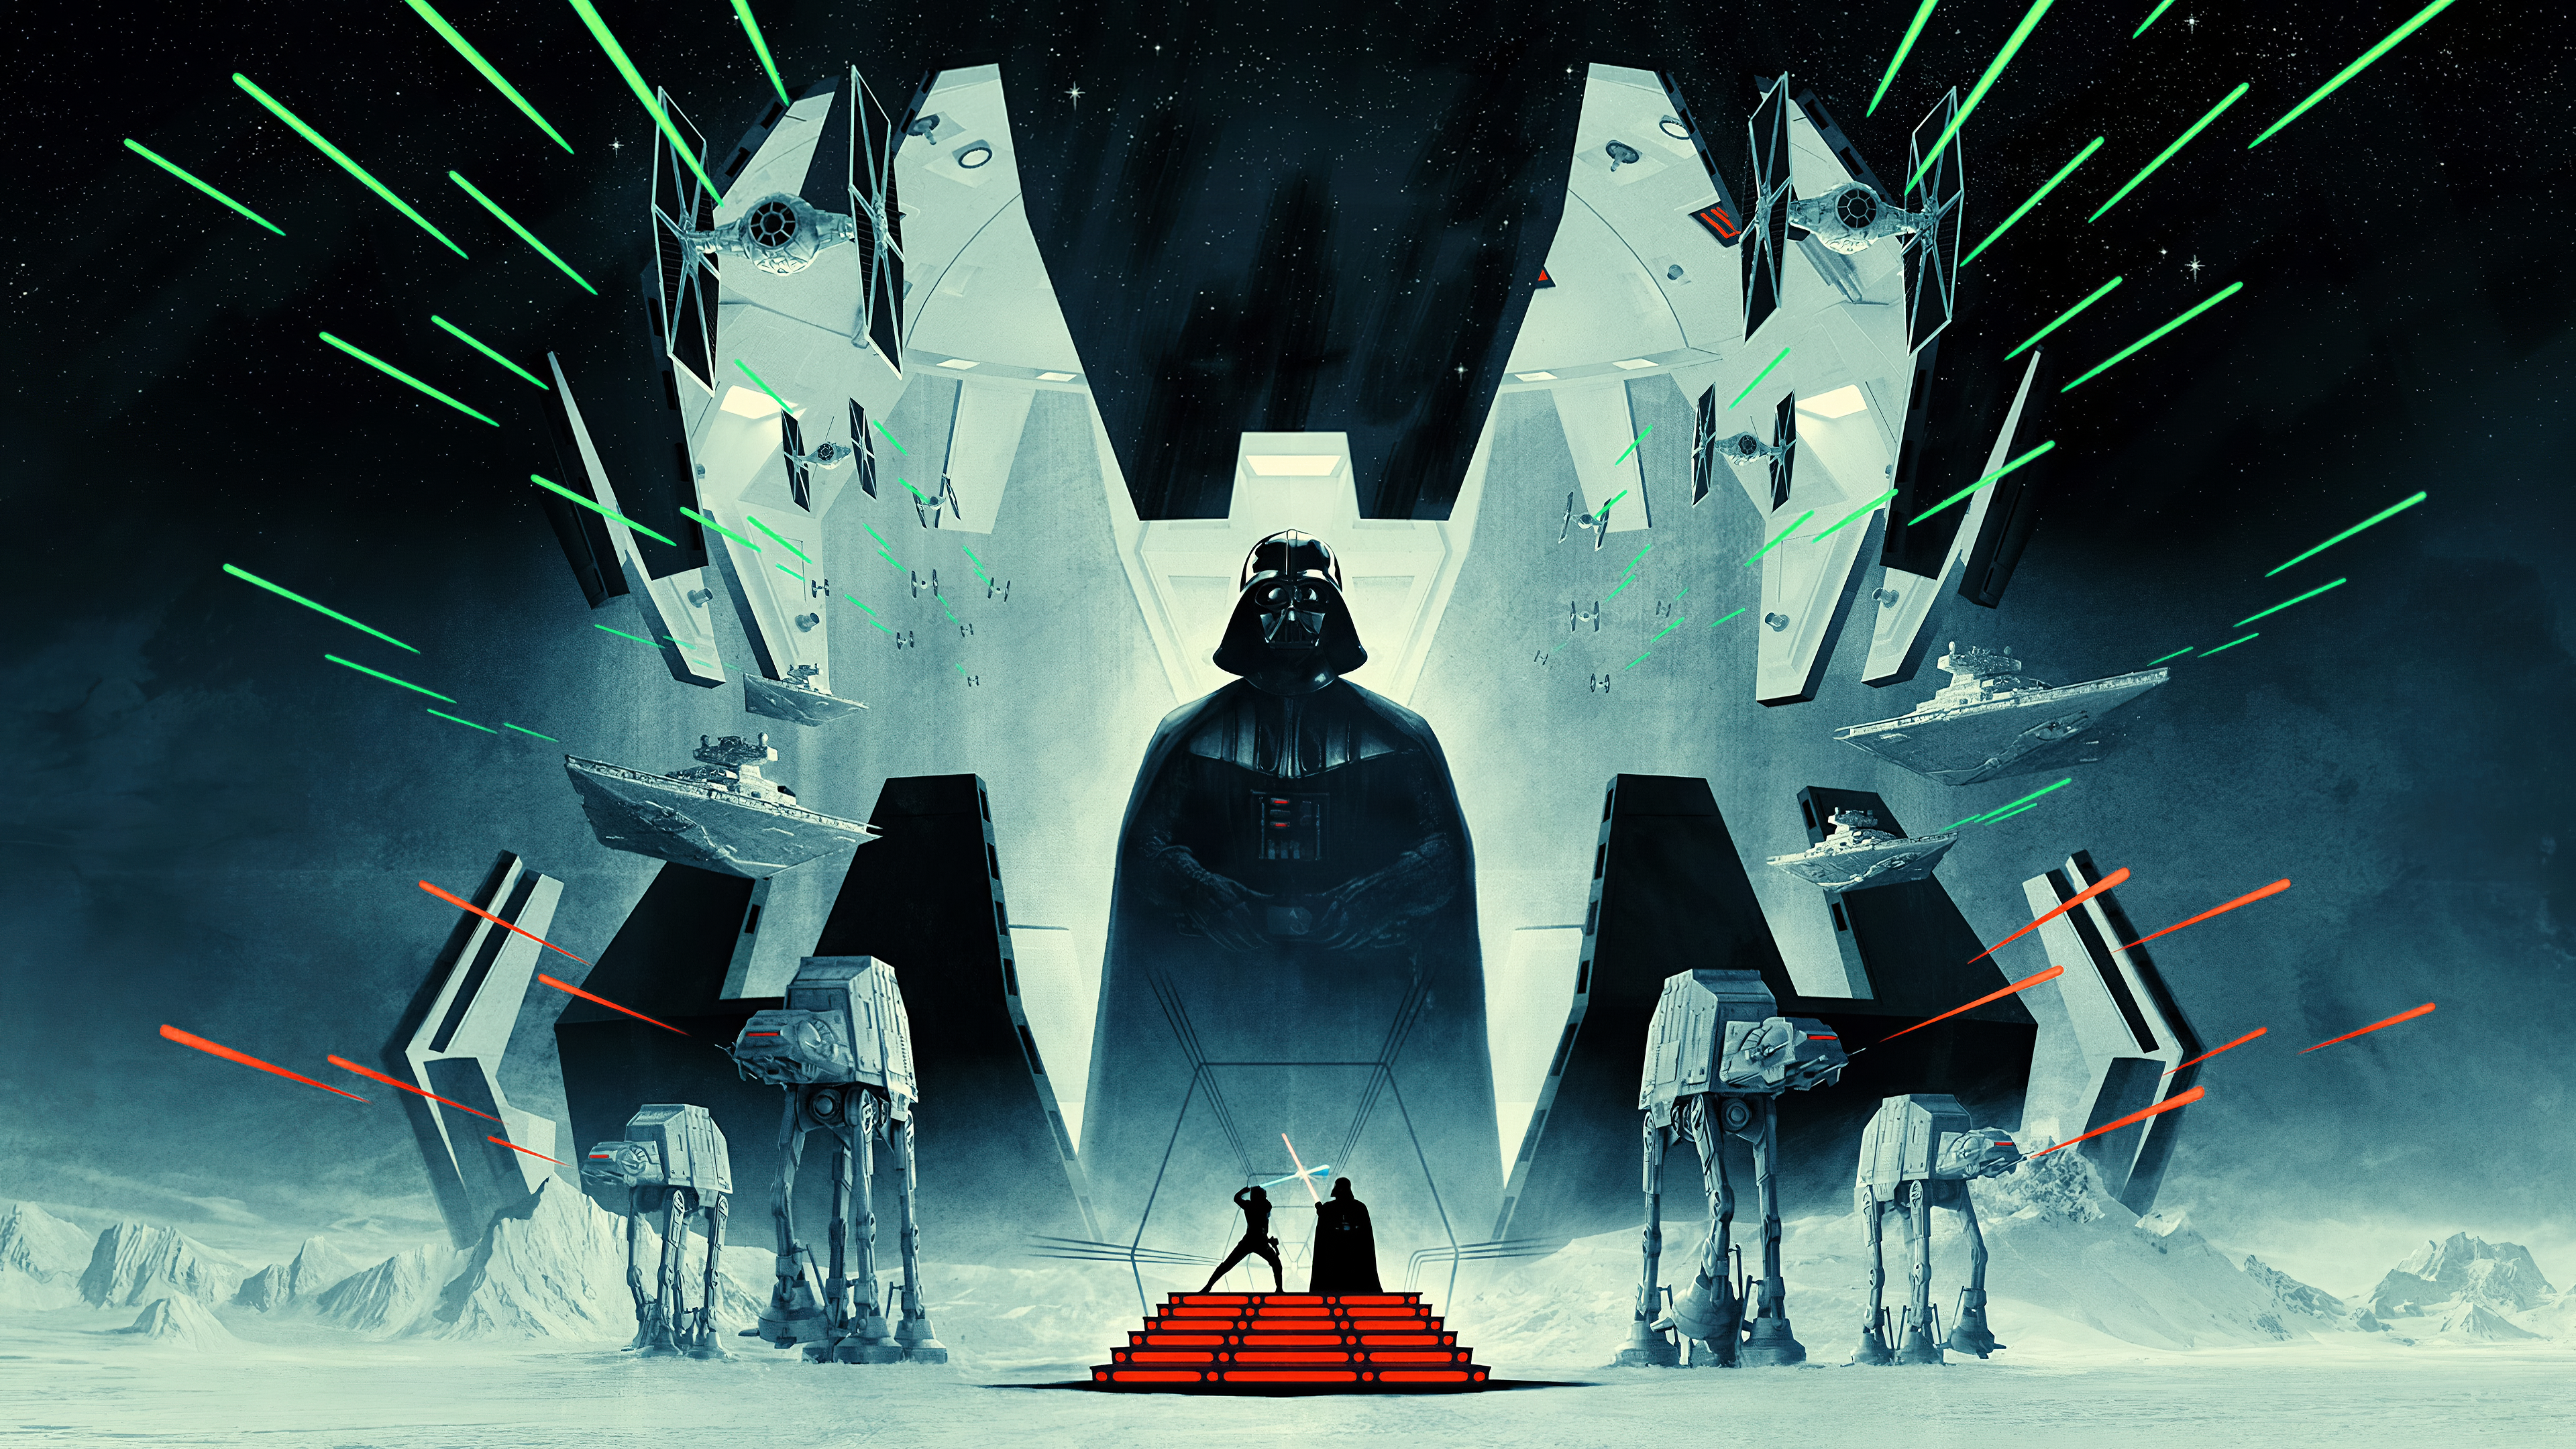 Star Wars: The Empire Strikes Back - 40th Anniversary by Matt Ferguson